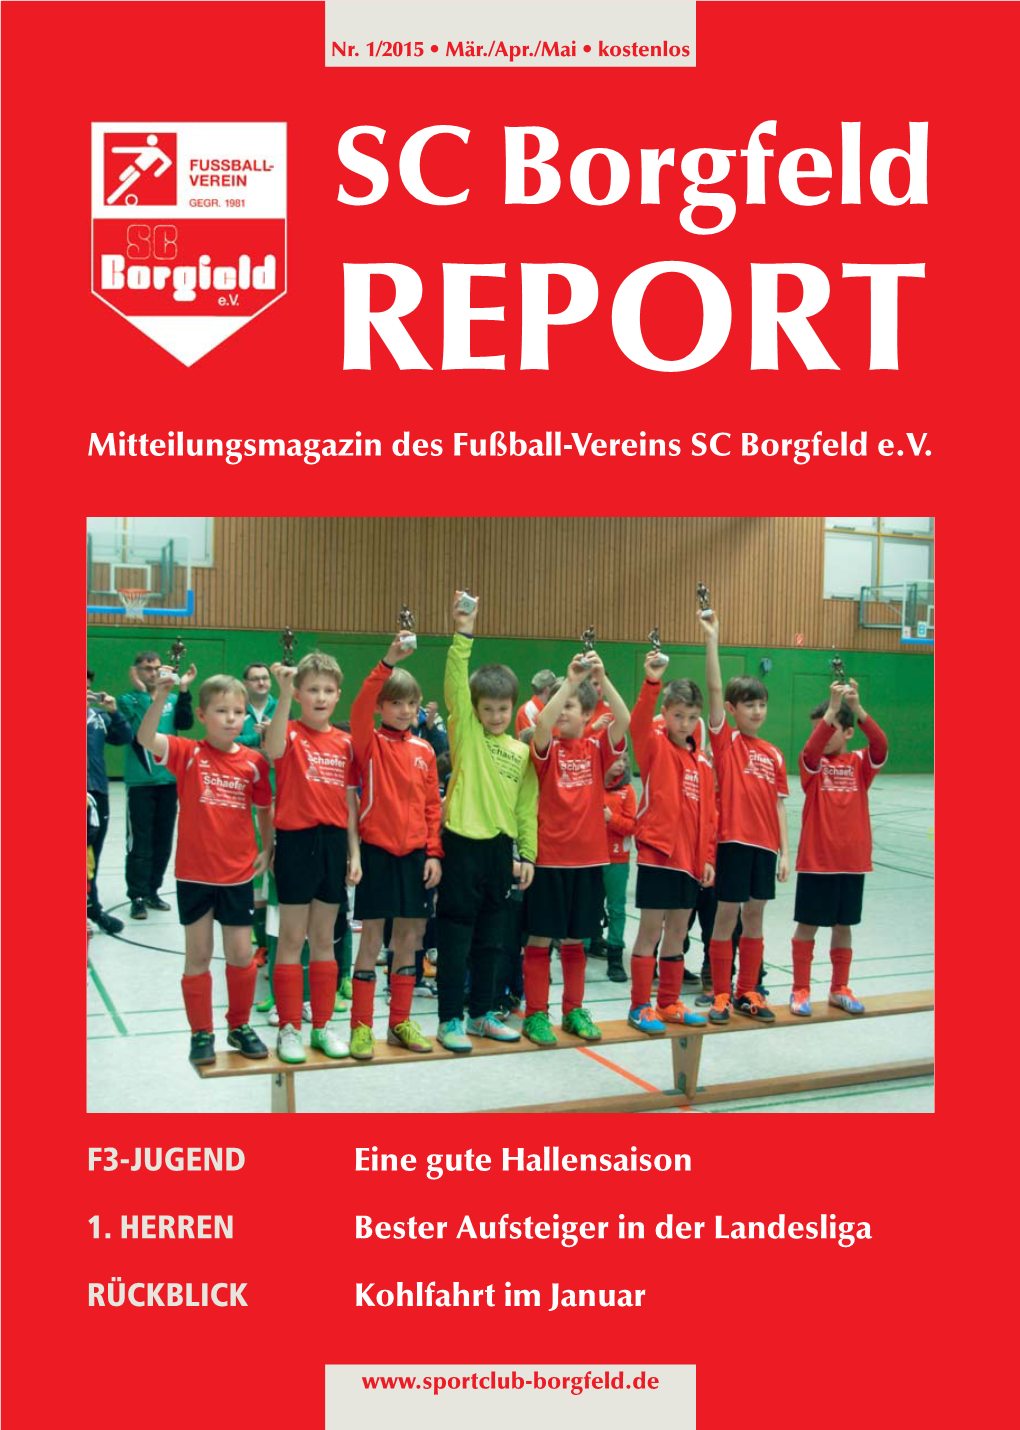 SC Borgfeld REPORT Mitteilungsmagazin Des Fußball-Vereins SC Borgfeld E.V